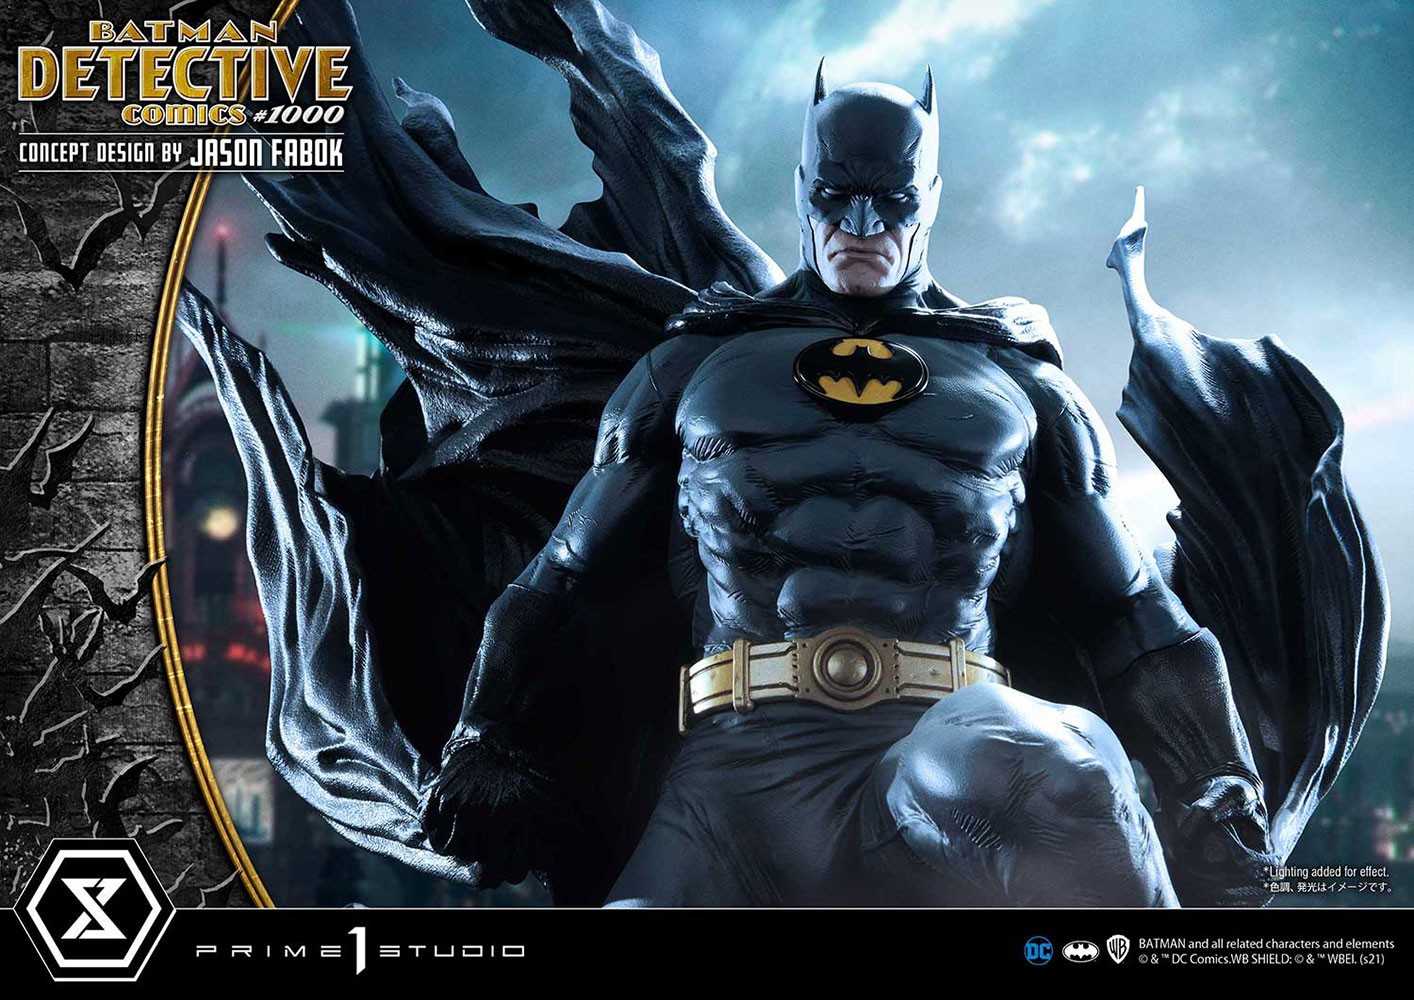 Batman Detective Comics #1000 Collector Edition (Prototype Shown) View 18